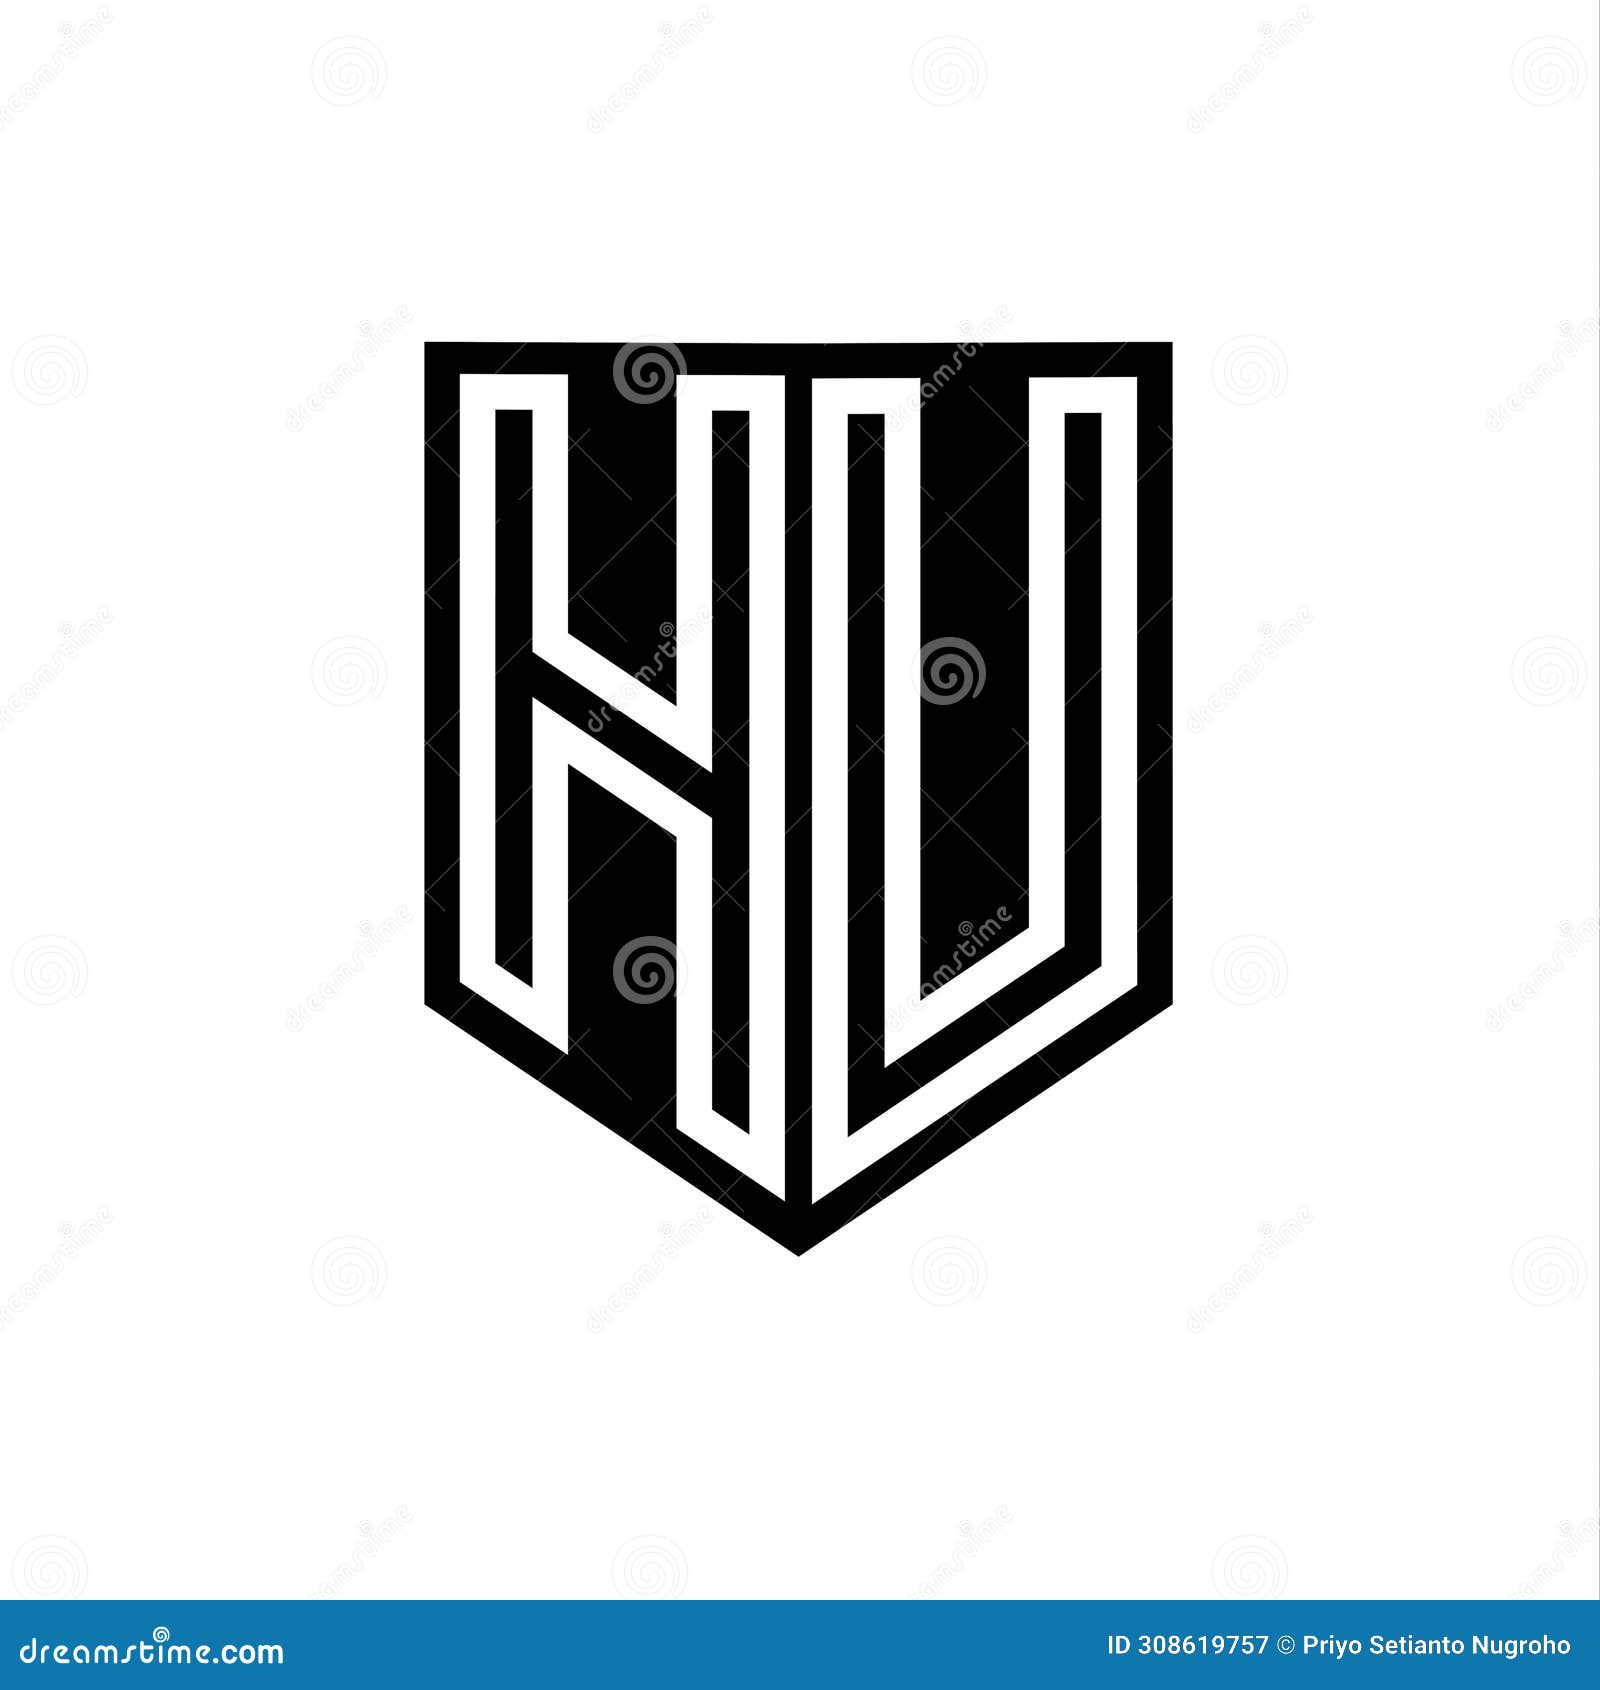 hu logo monogram shield geometric white line inside black shield color 